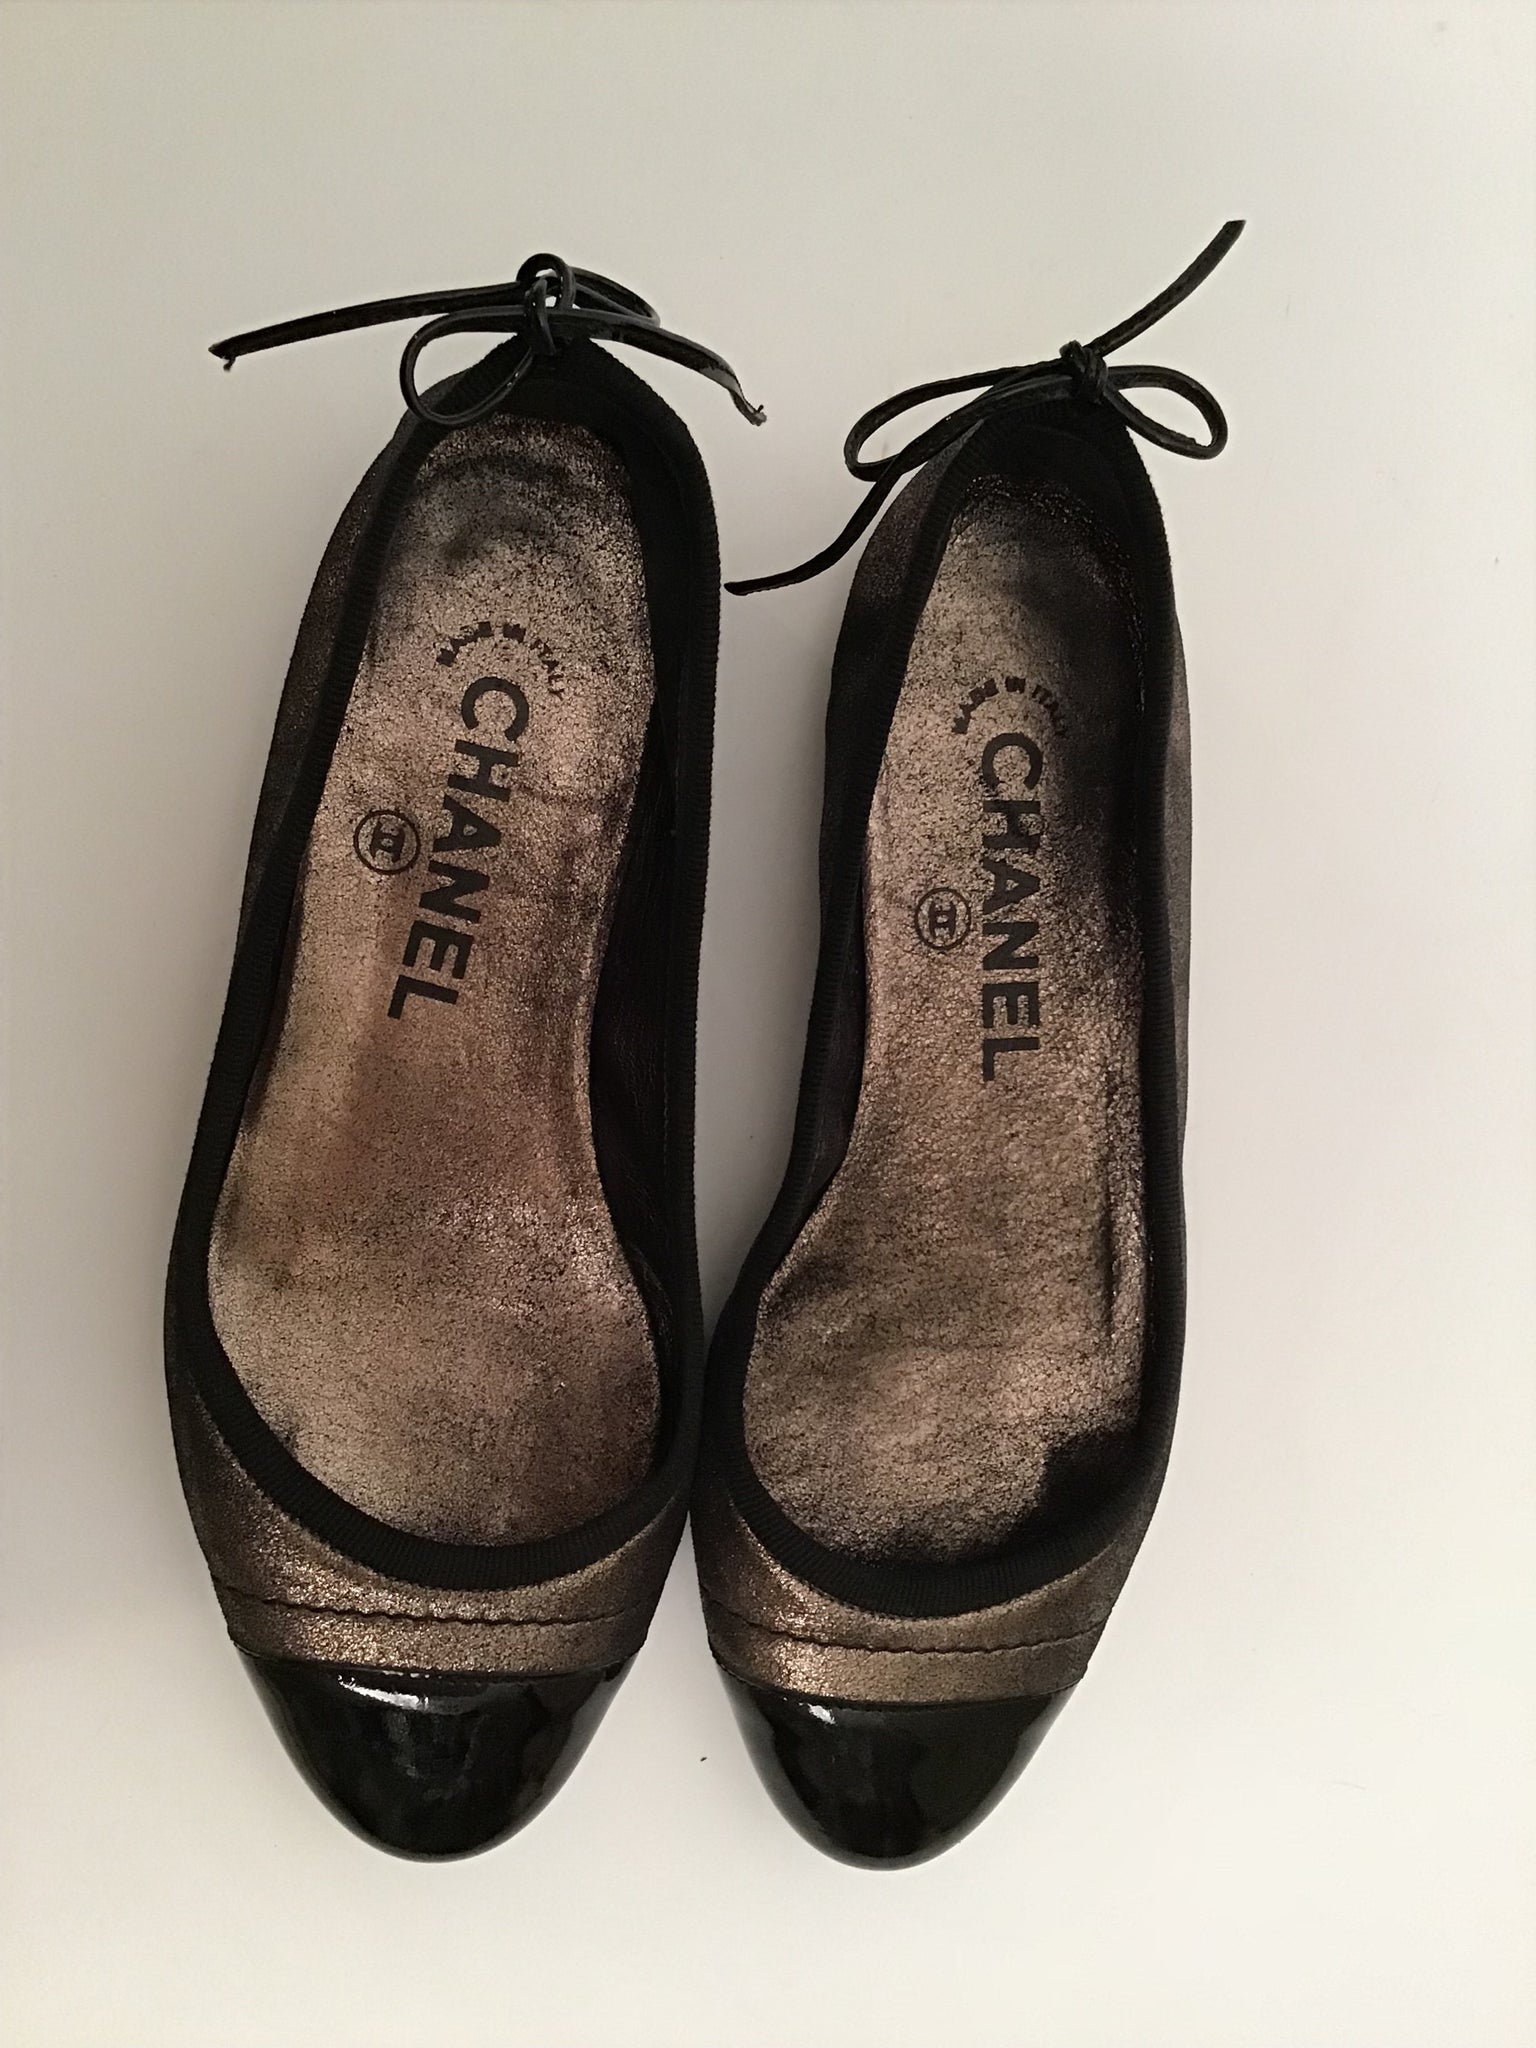 Chanel Metallic Ballet Ballerina Flats Shoes